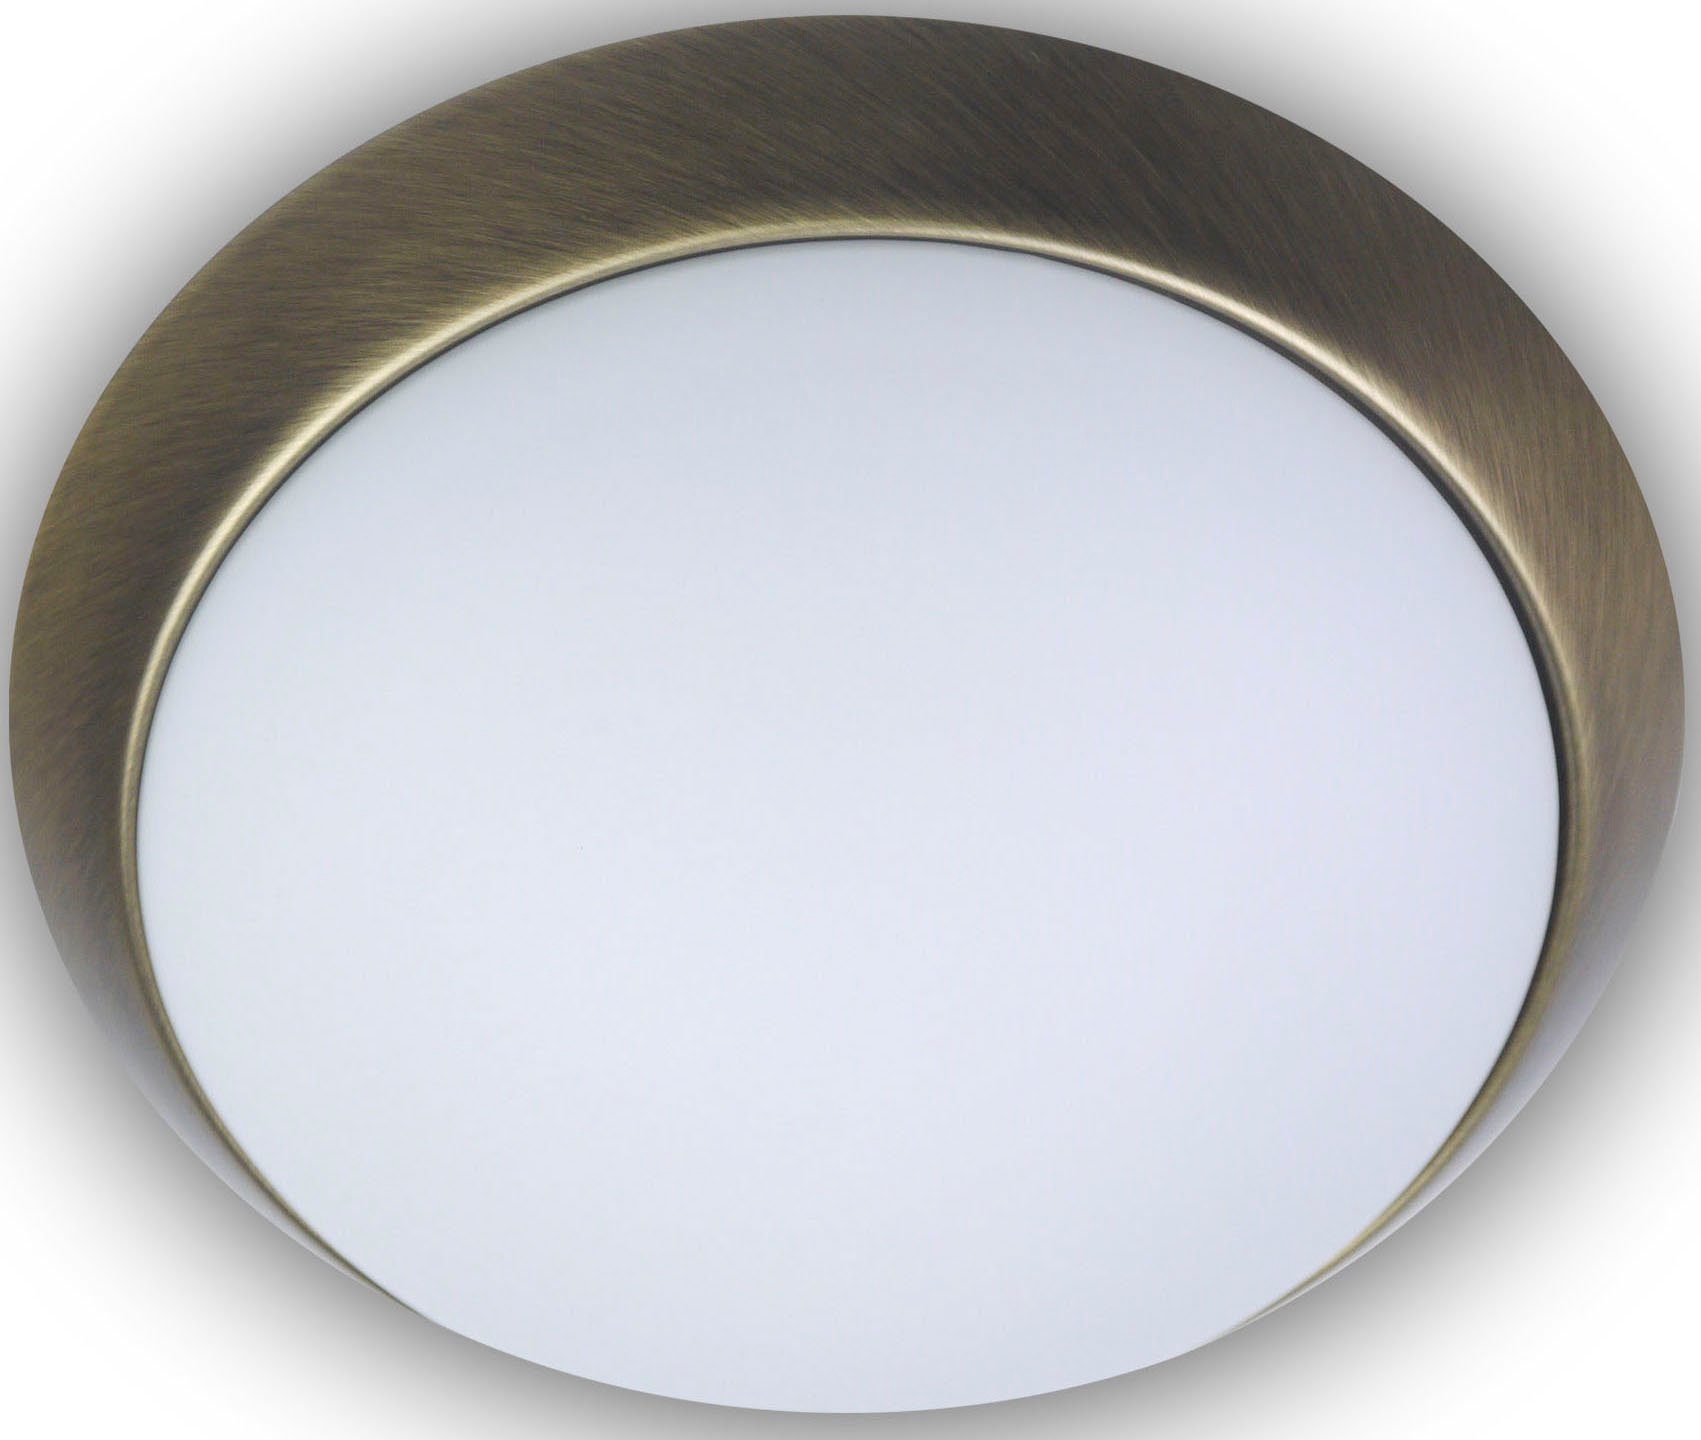 LED, 50 Sensor, Dekorring niermann Deckenleuchte Altmessing, matt, wechselbar, Warmweiß LED cm, HF Opal